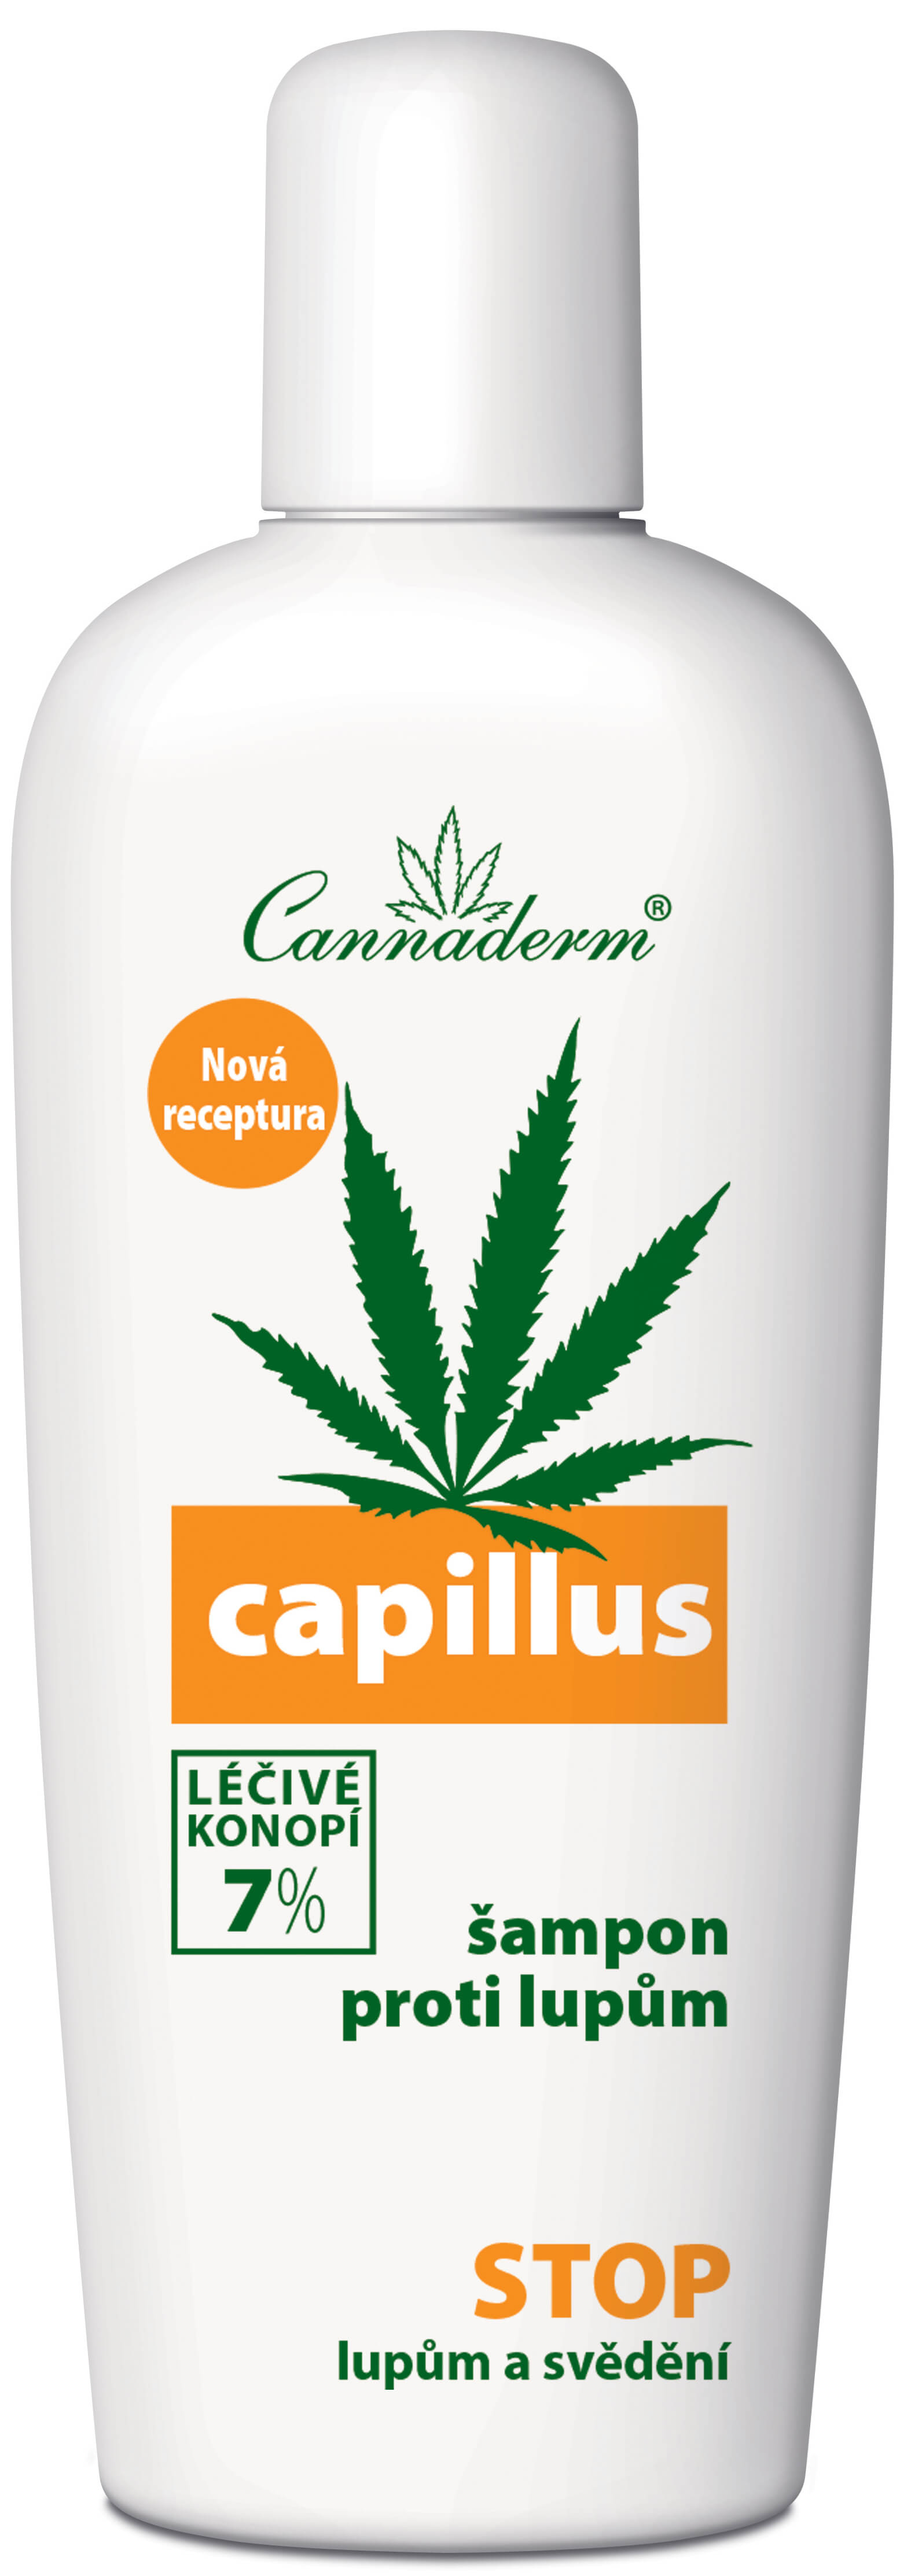 Zobrazit detail výrobku Cannaderm Šampon proti lupům Capillus 150 ml